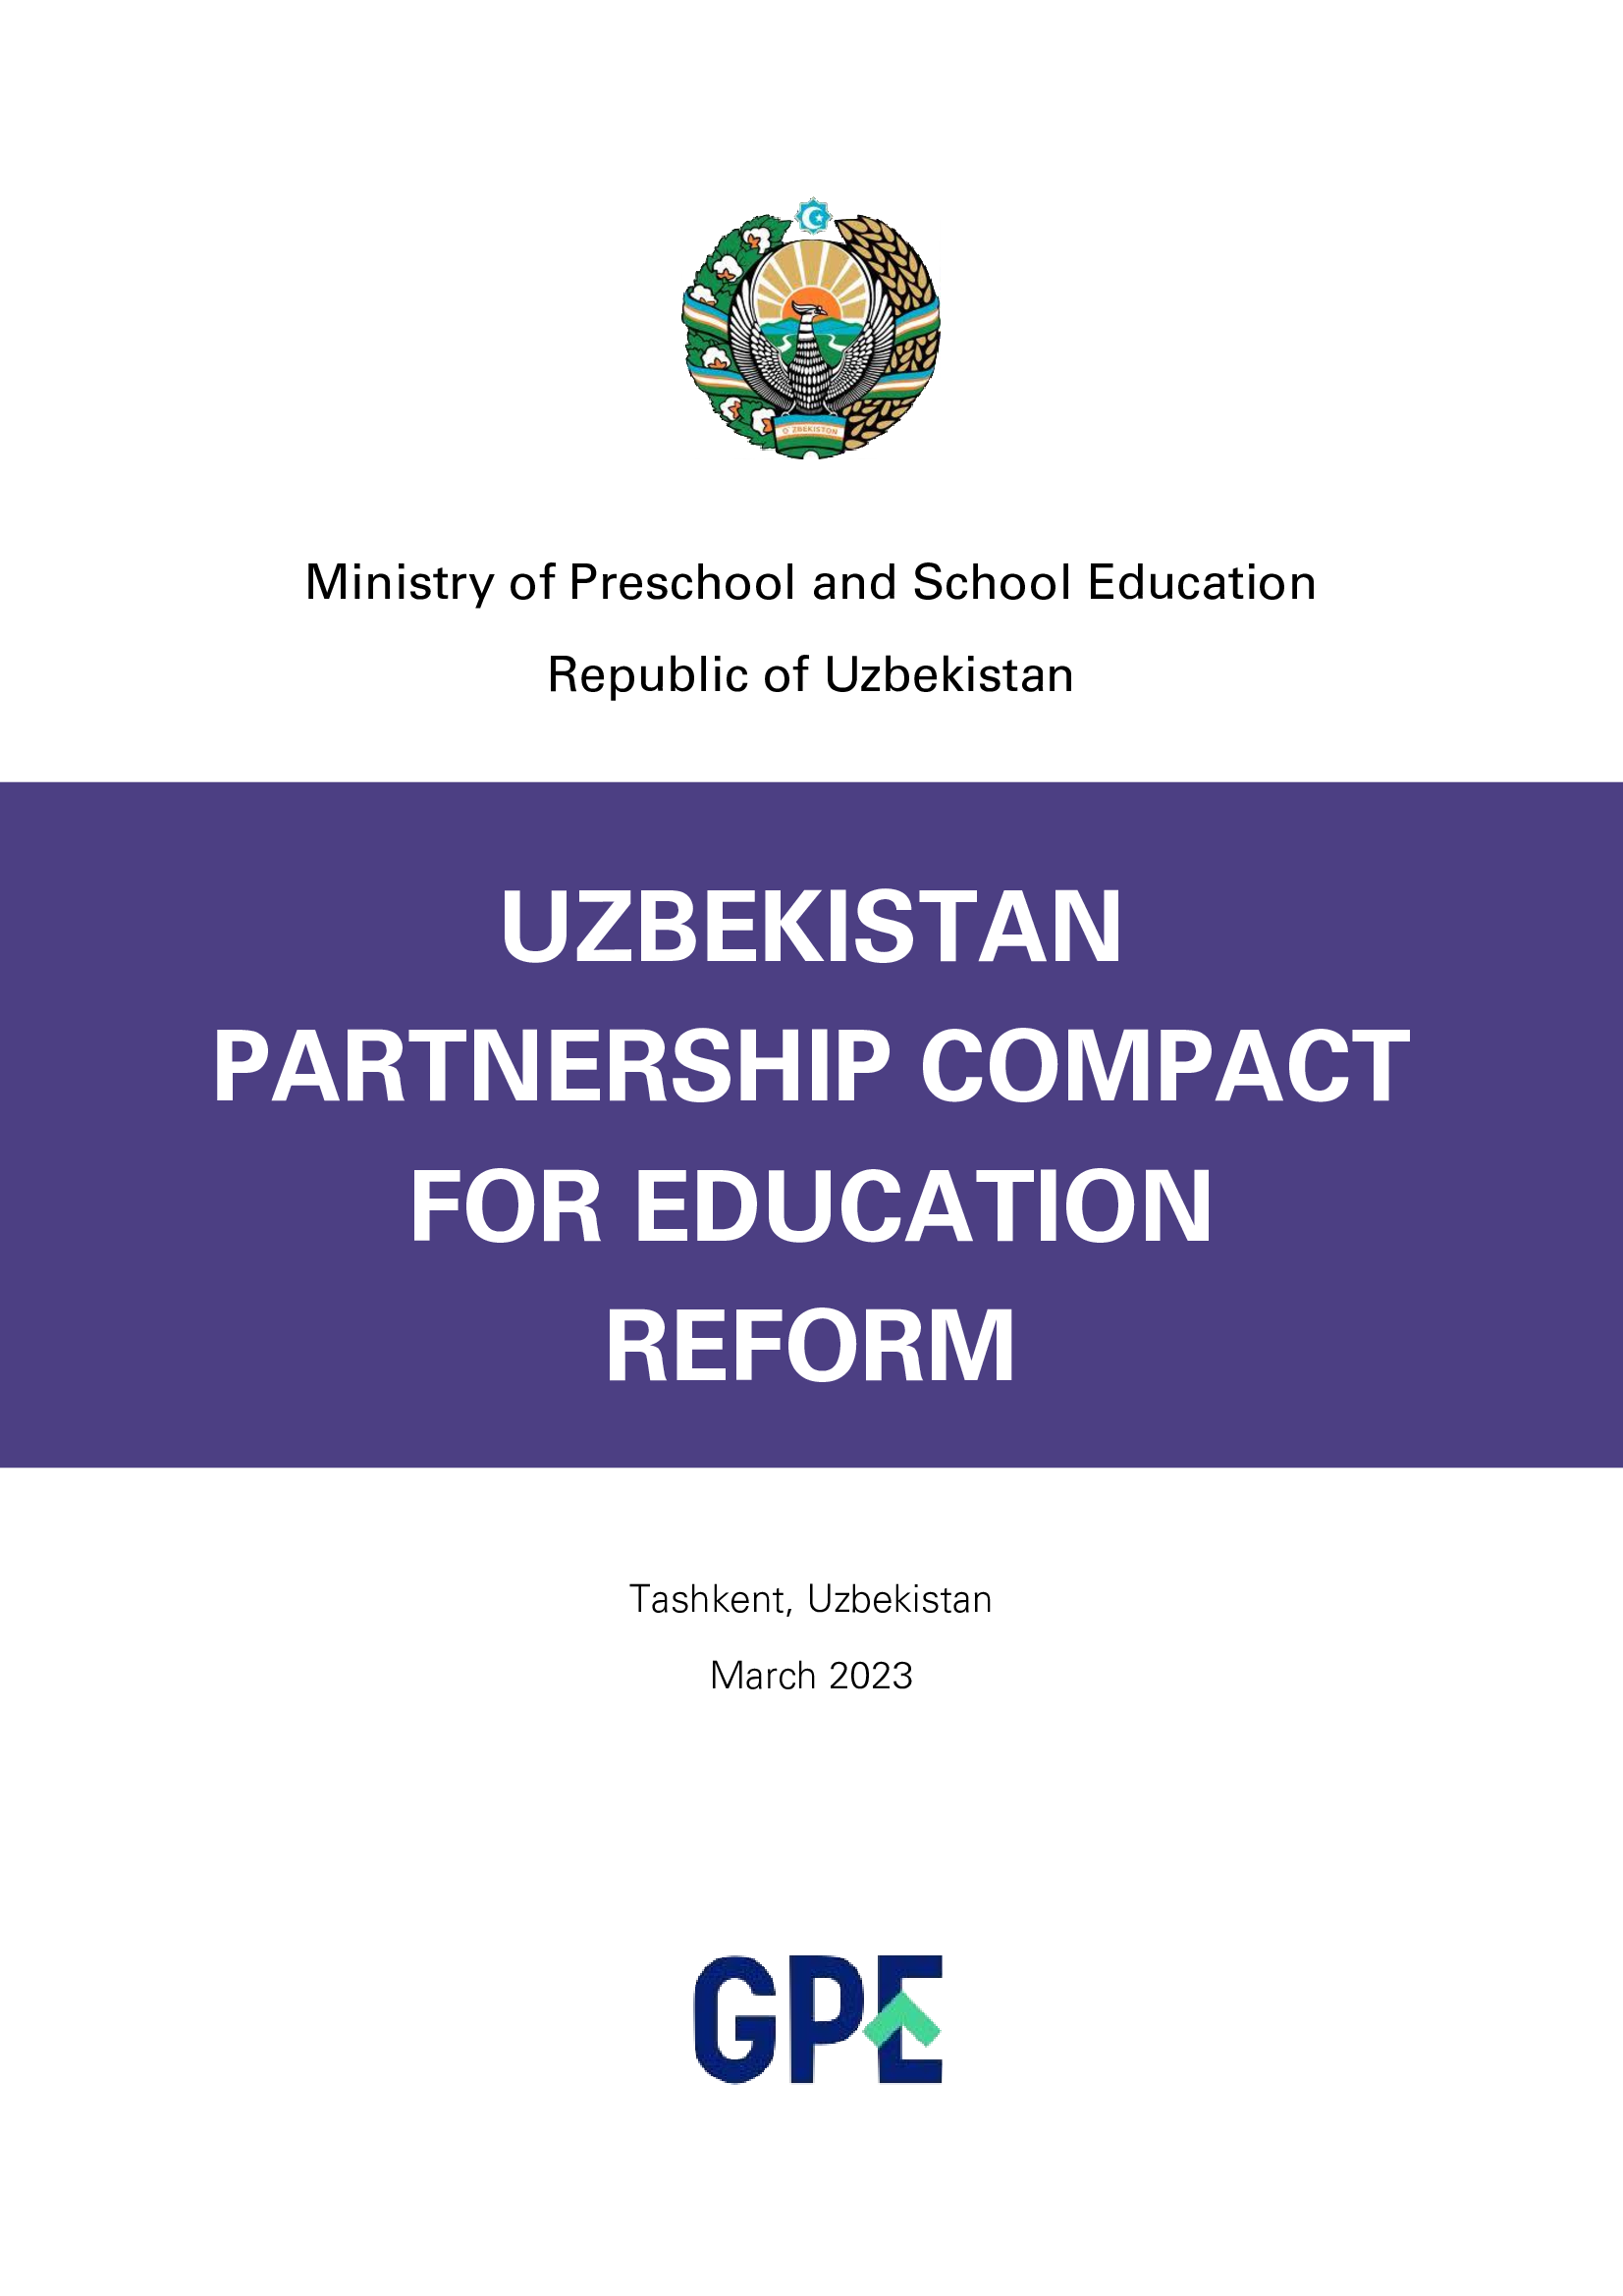 education system of uzbekistan presentation